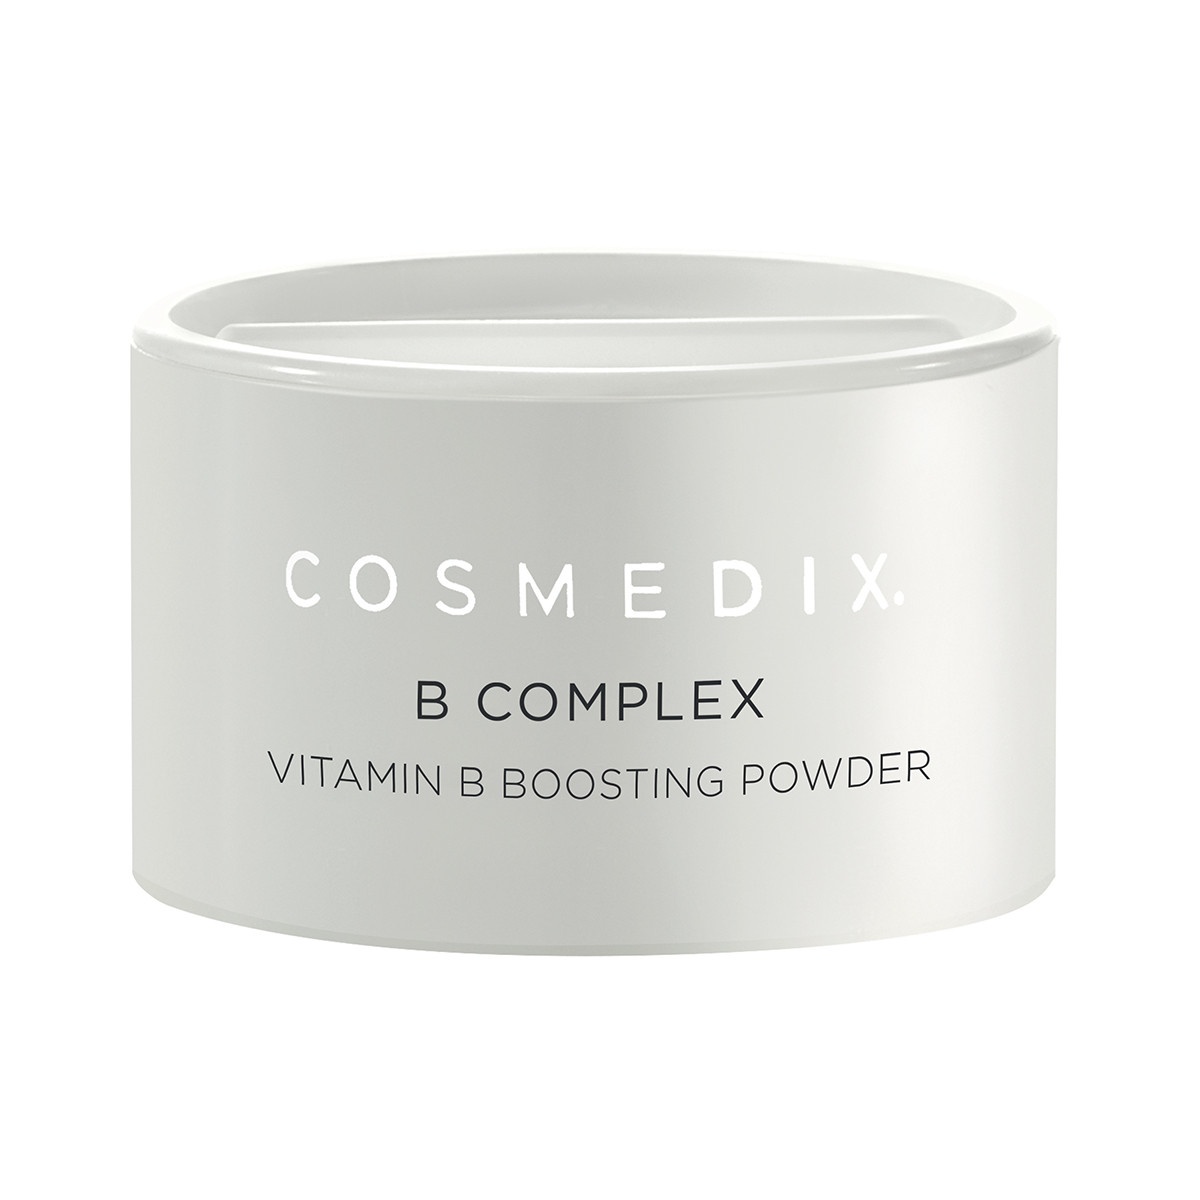 Cosmedix B Complex Vitamin B Boosting Powder